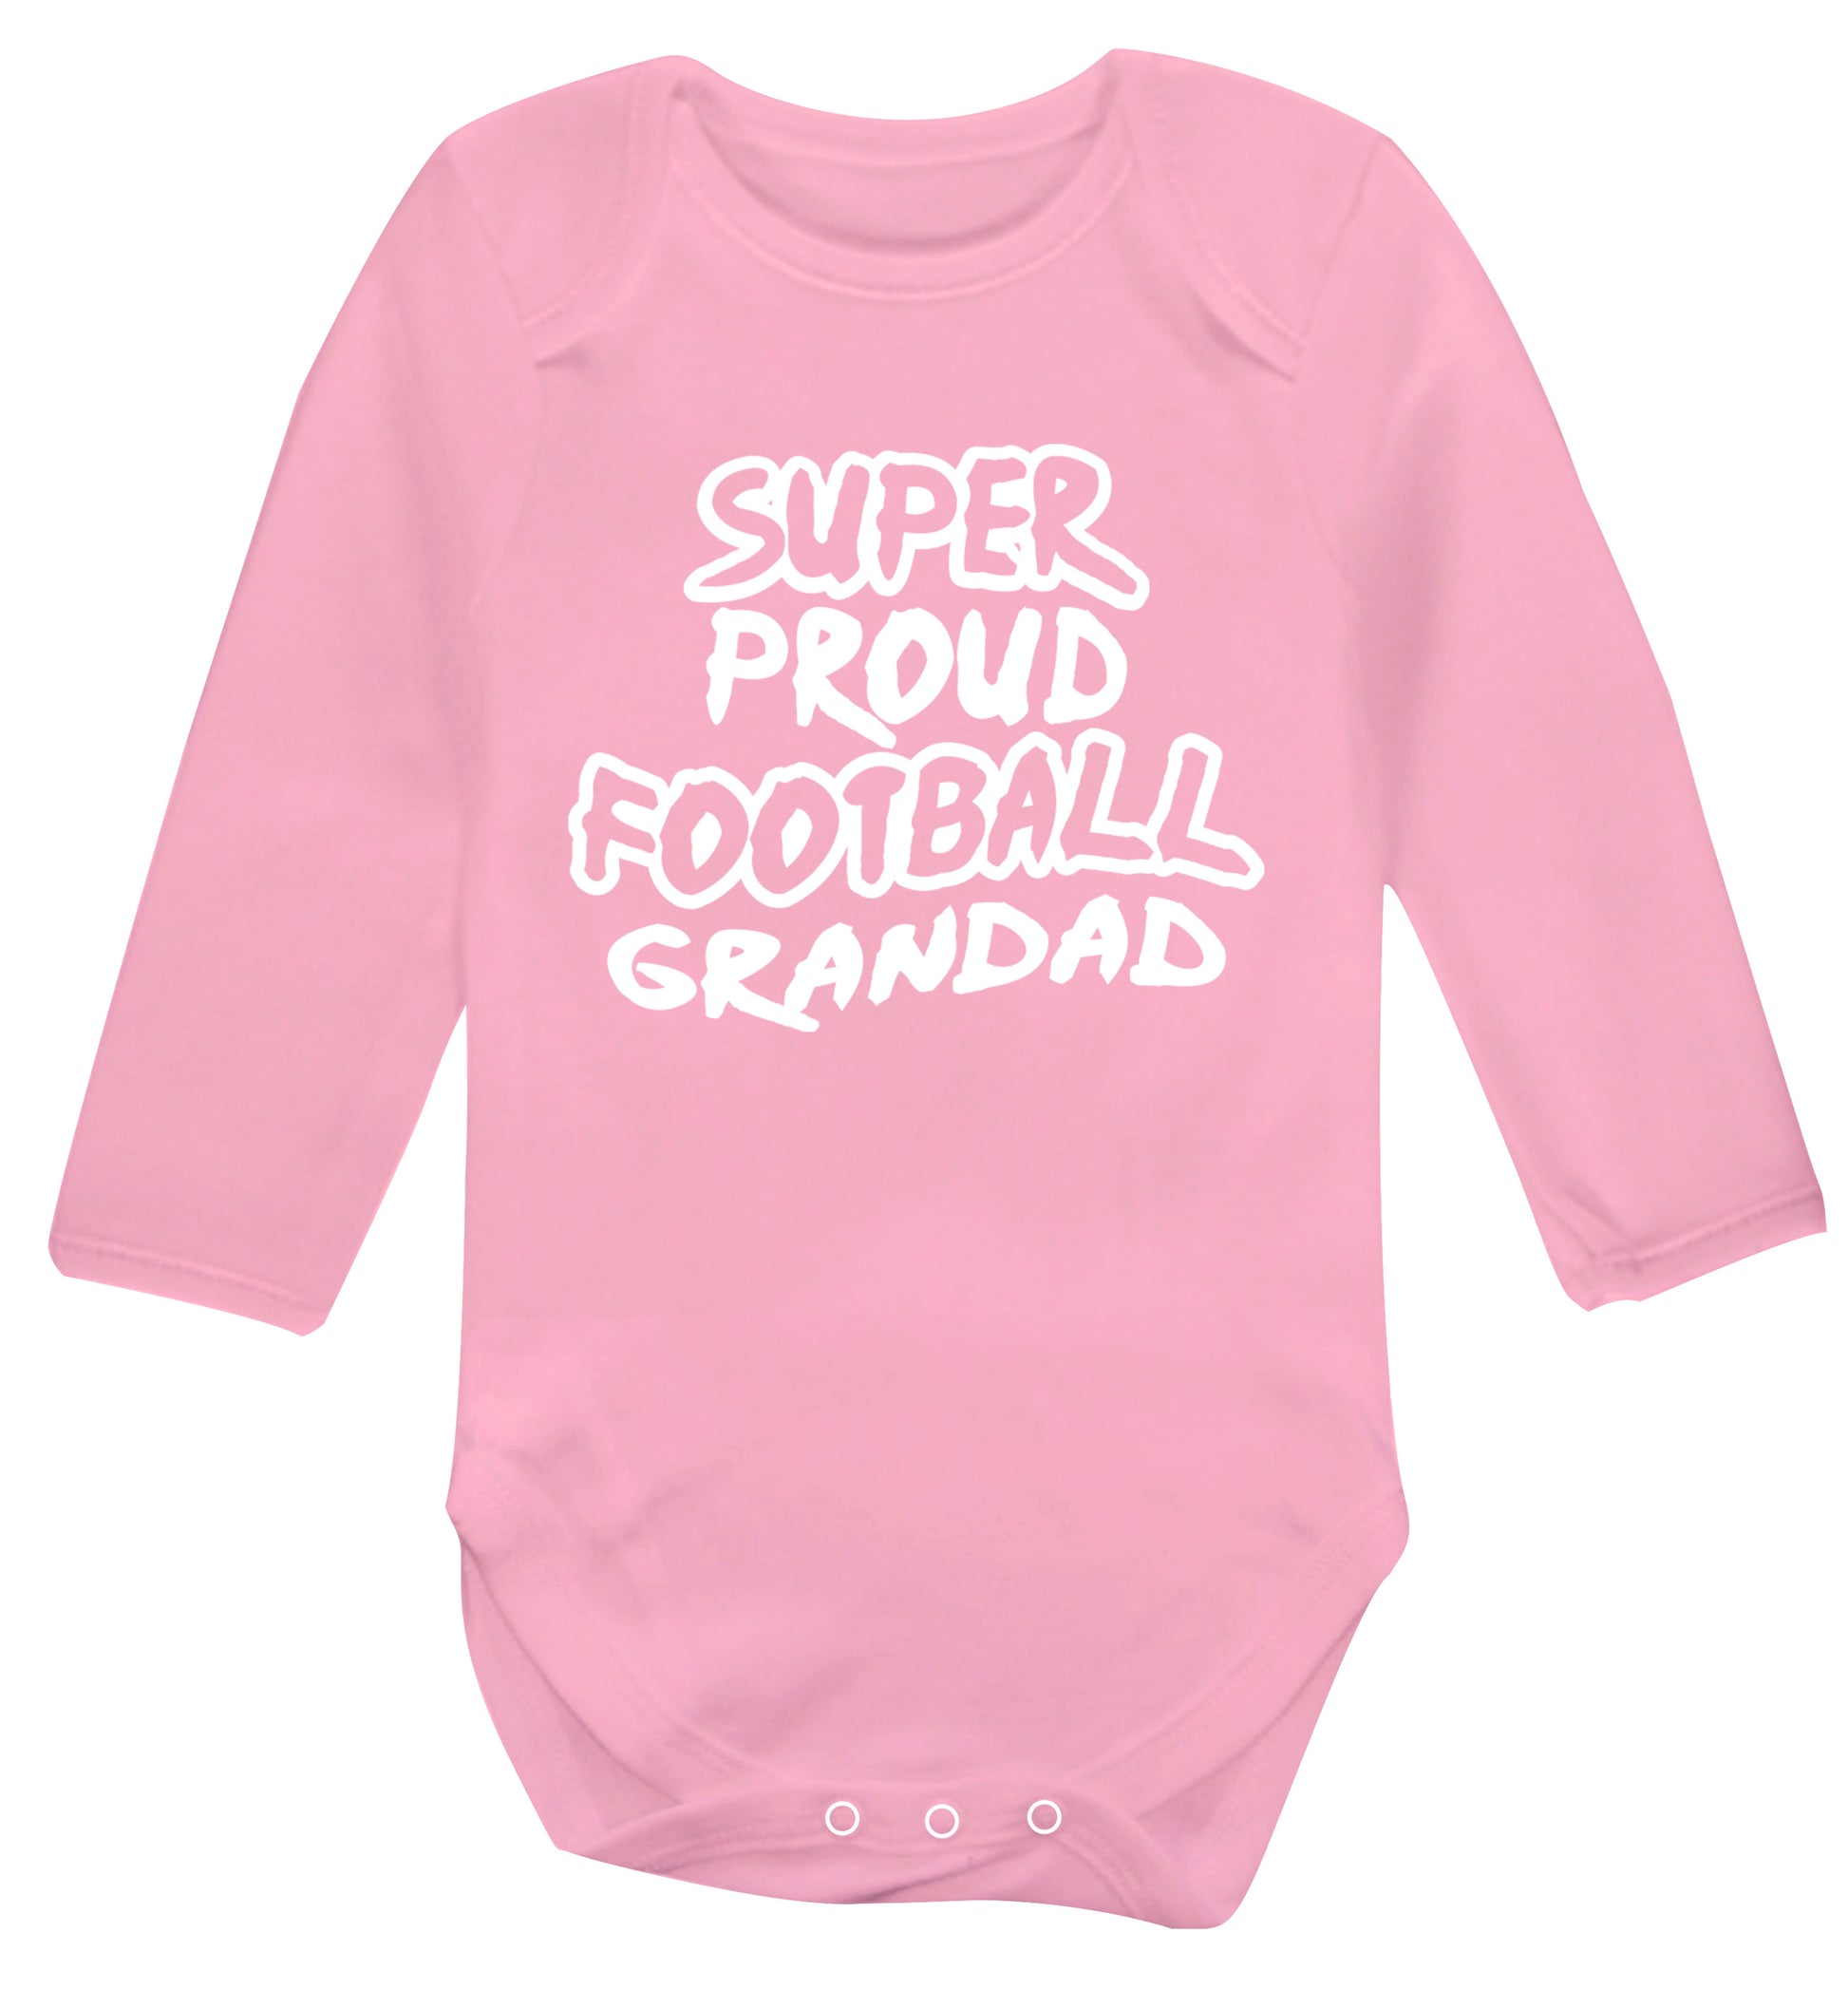 Super proud football grandad Baby Vest long sleeved pale pink 6-12 months